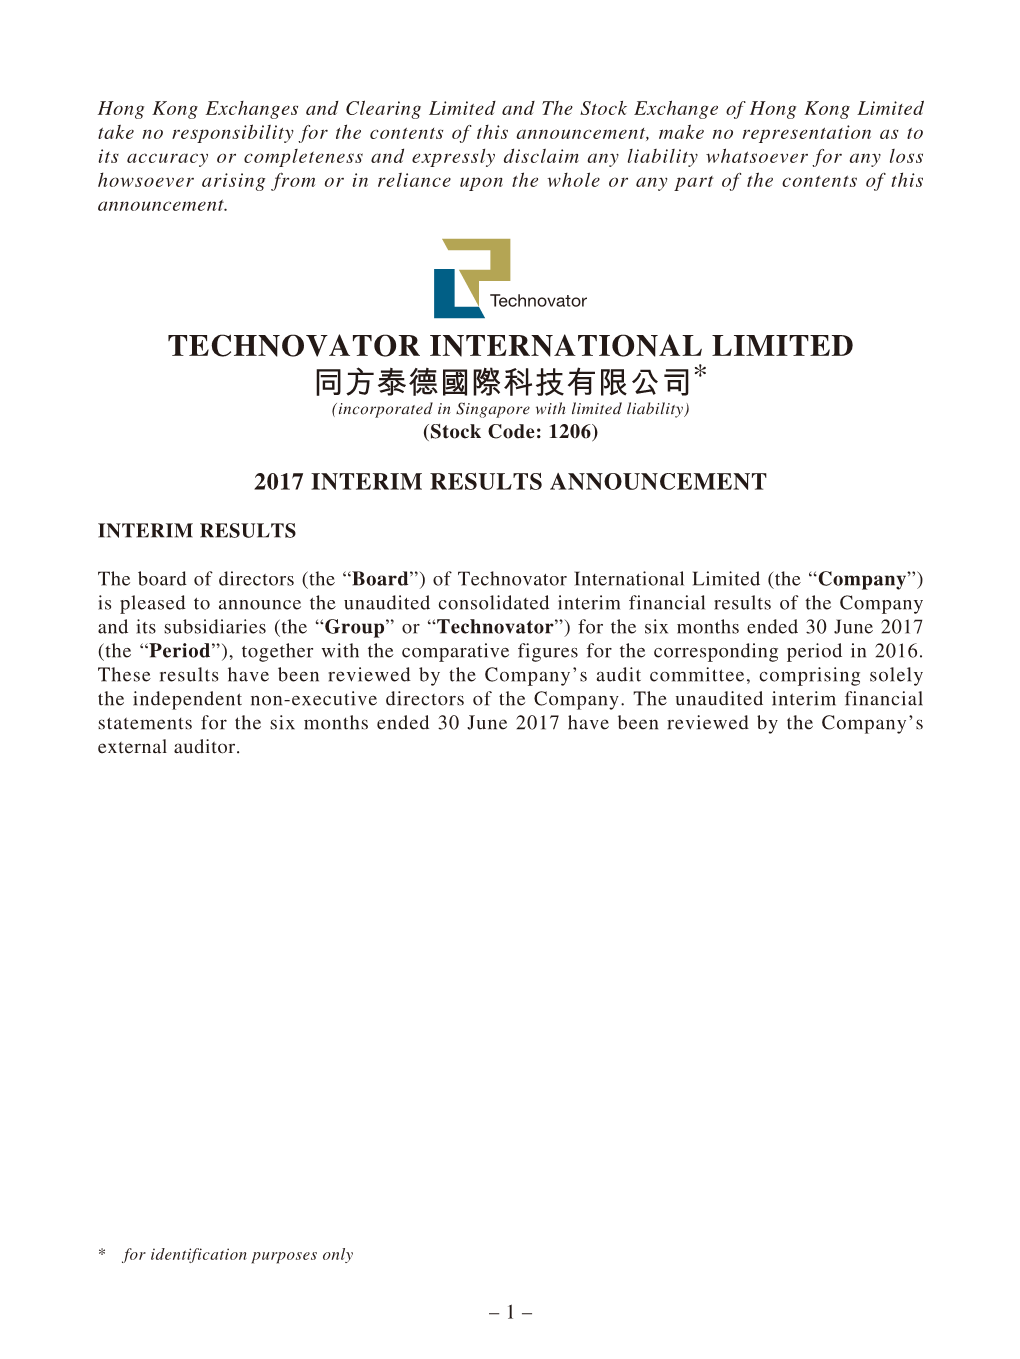 Technovator International Limited 同方泰德國際科技有限公司 *